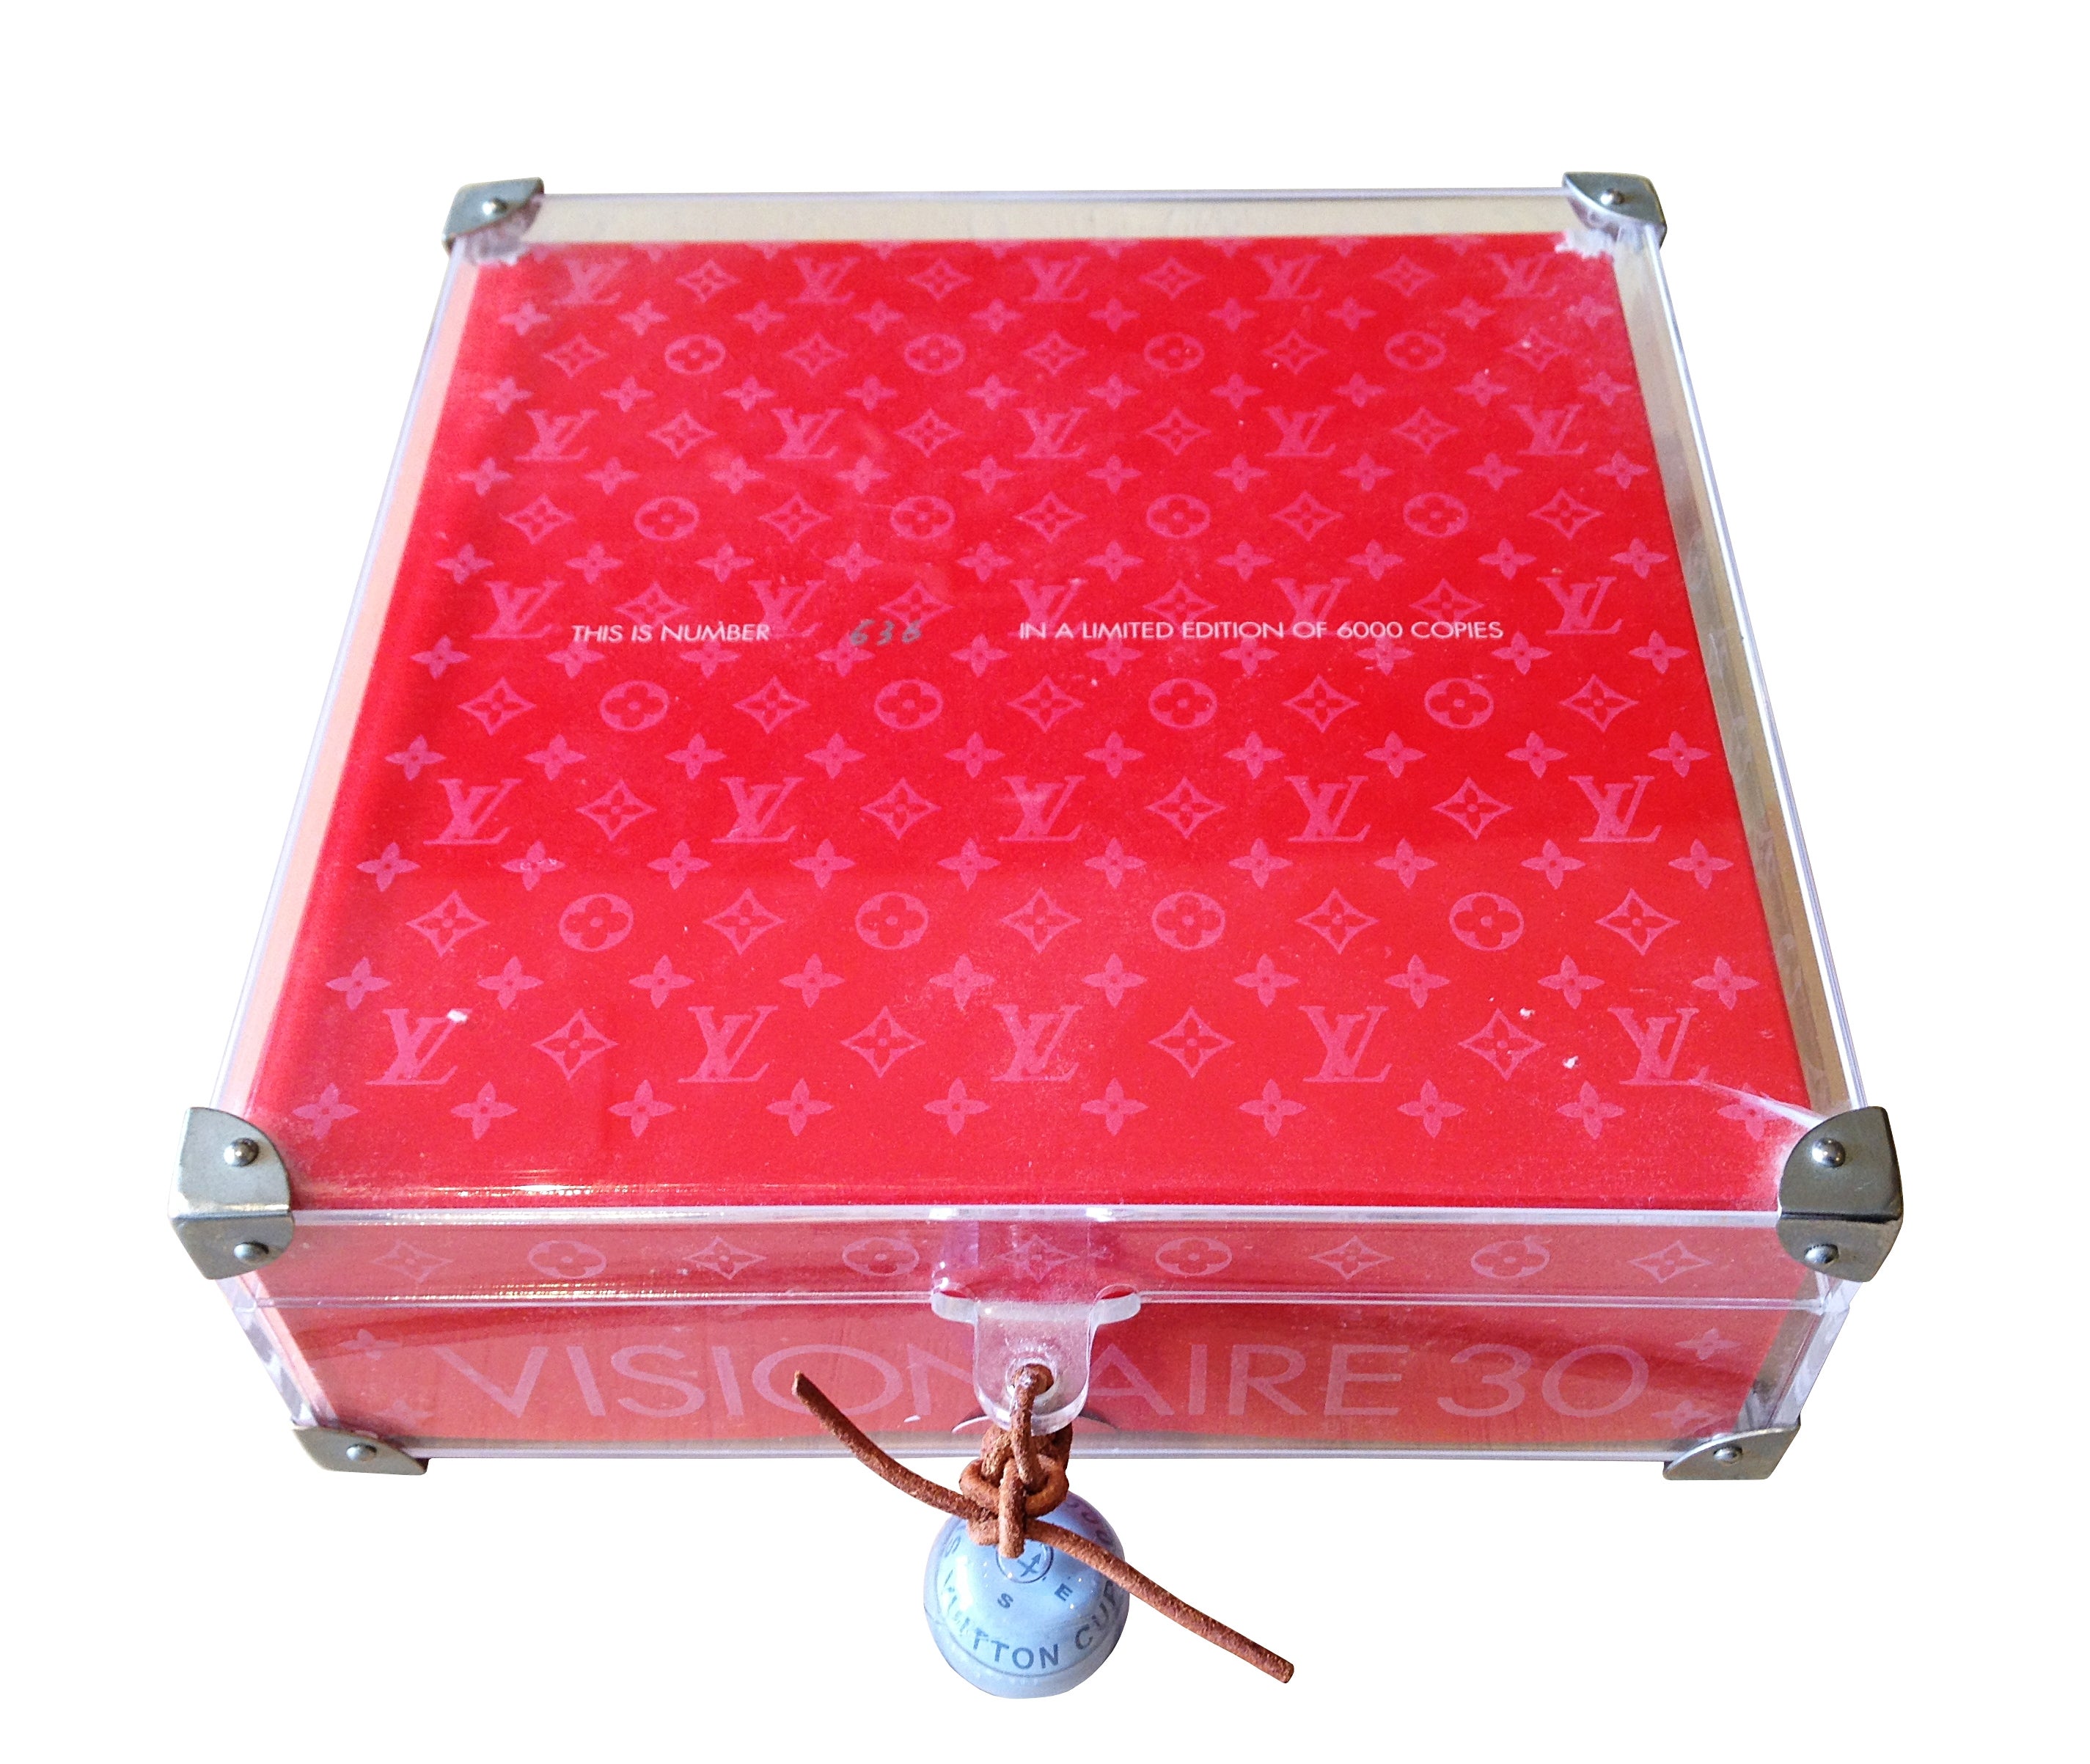 Louis Vuitton Visionaire 30 The Game Set Switzerland Edition Lucite Trunk Box